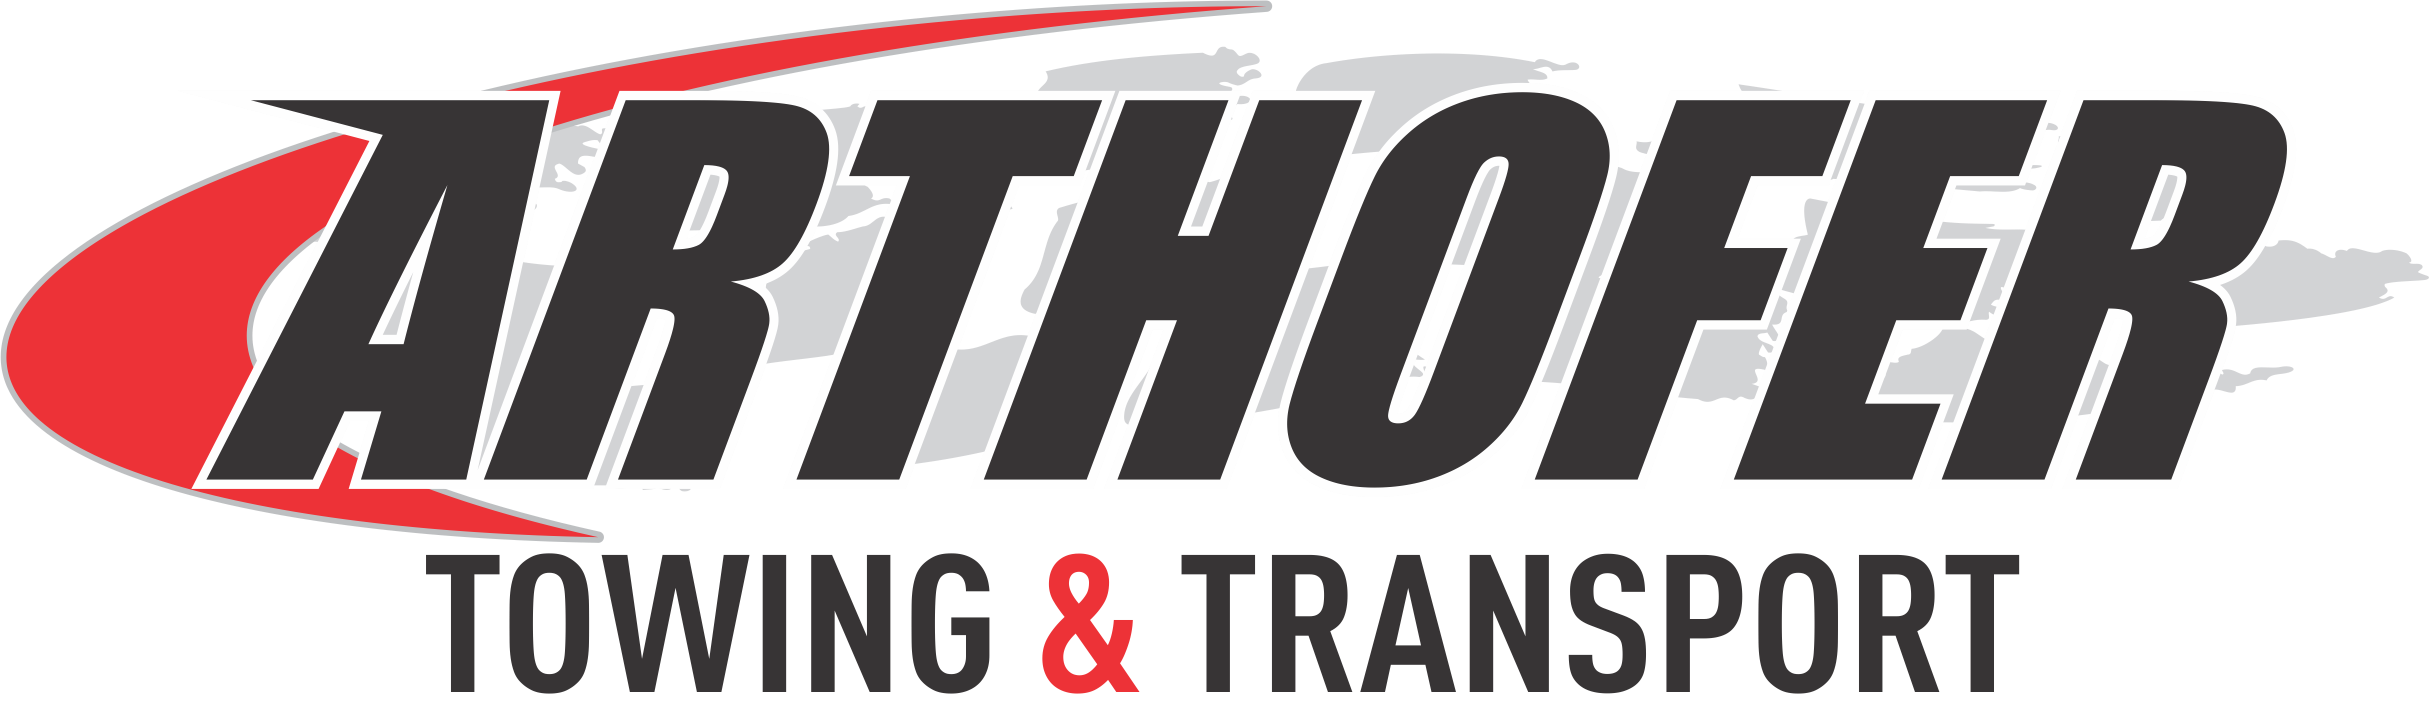 Arthofer's Towing & Transport LLC